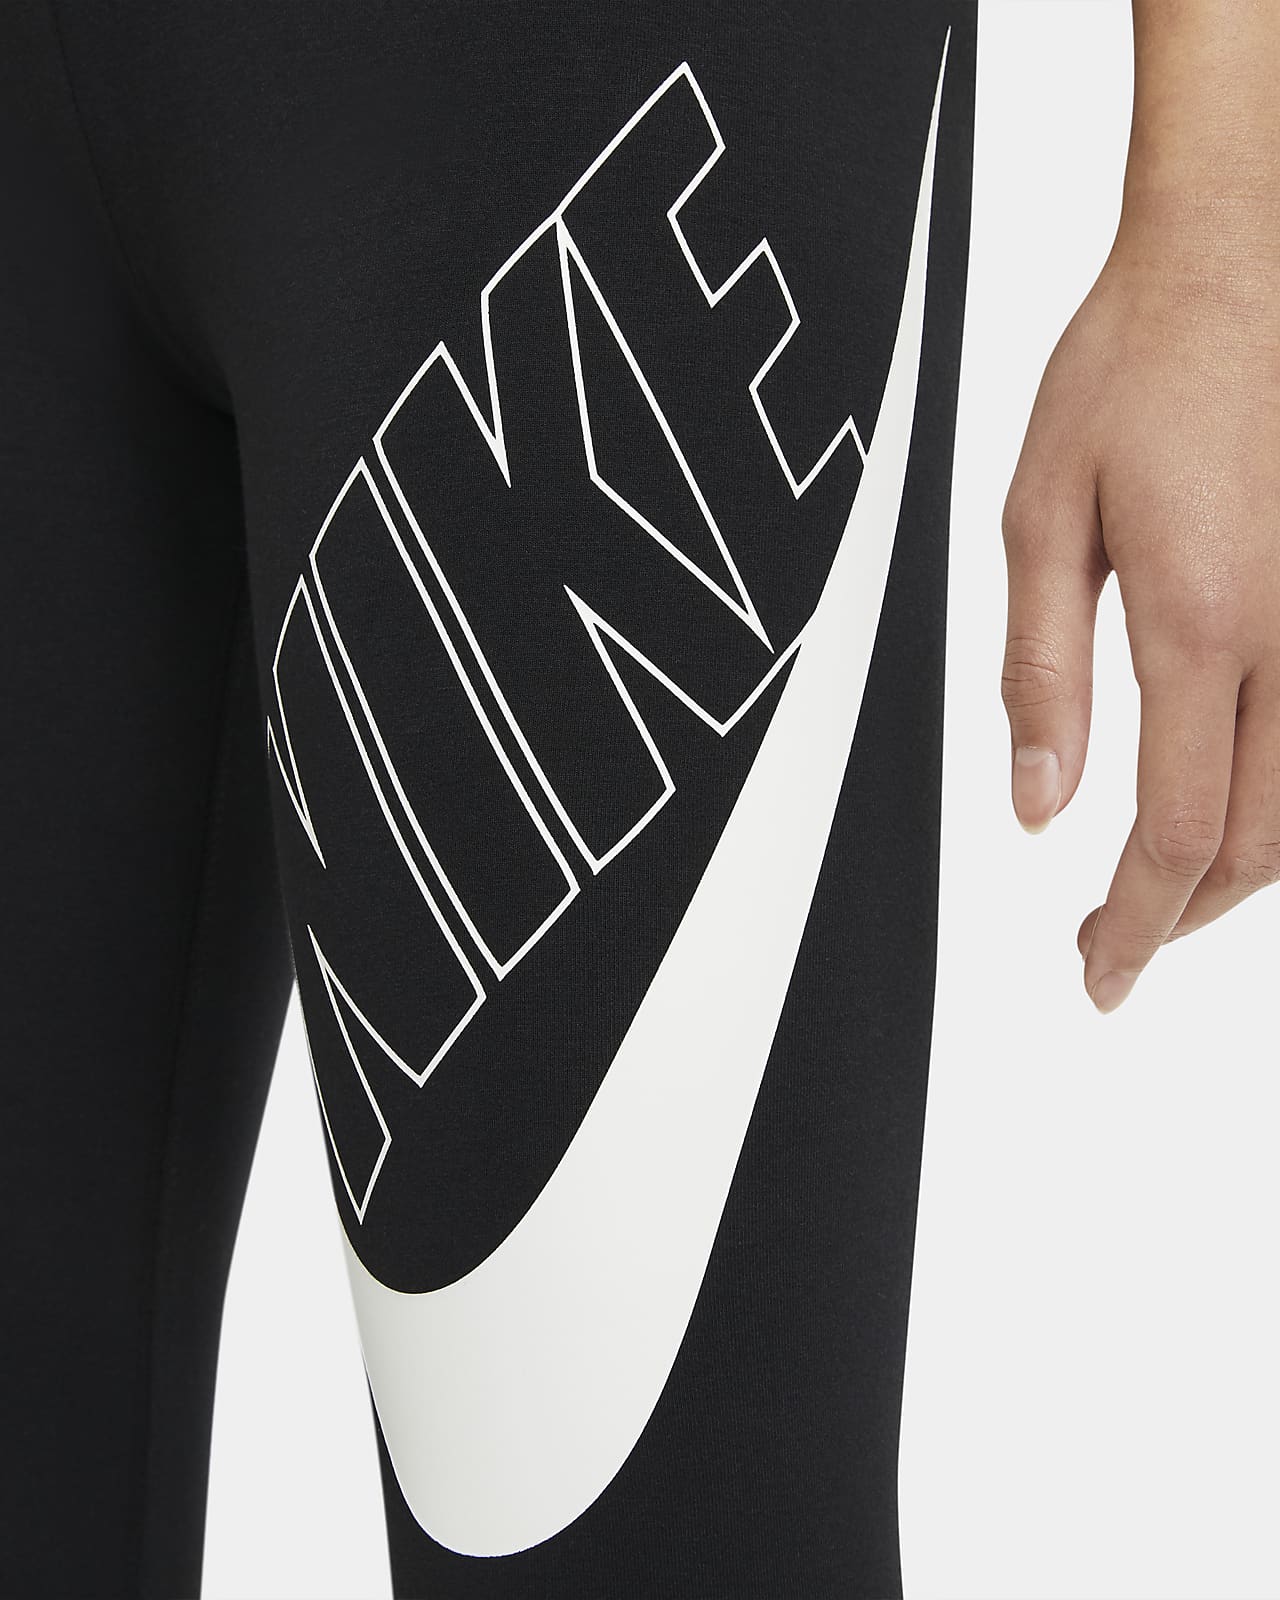 Femme LOGOS Black/White  Nike Legging » Marques M.C.R